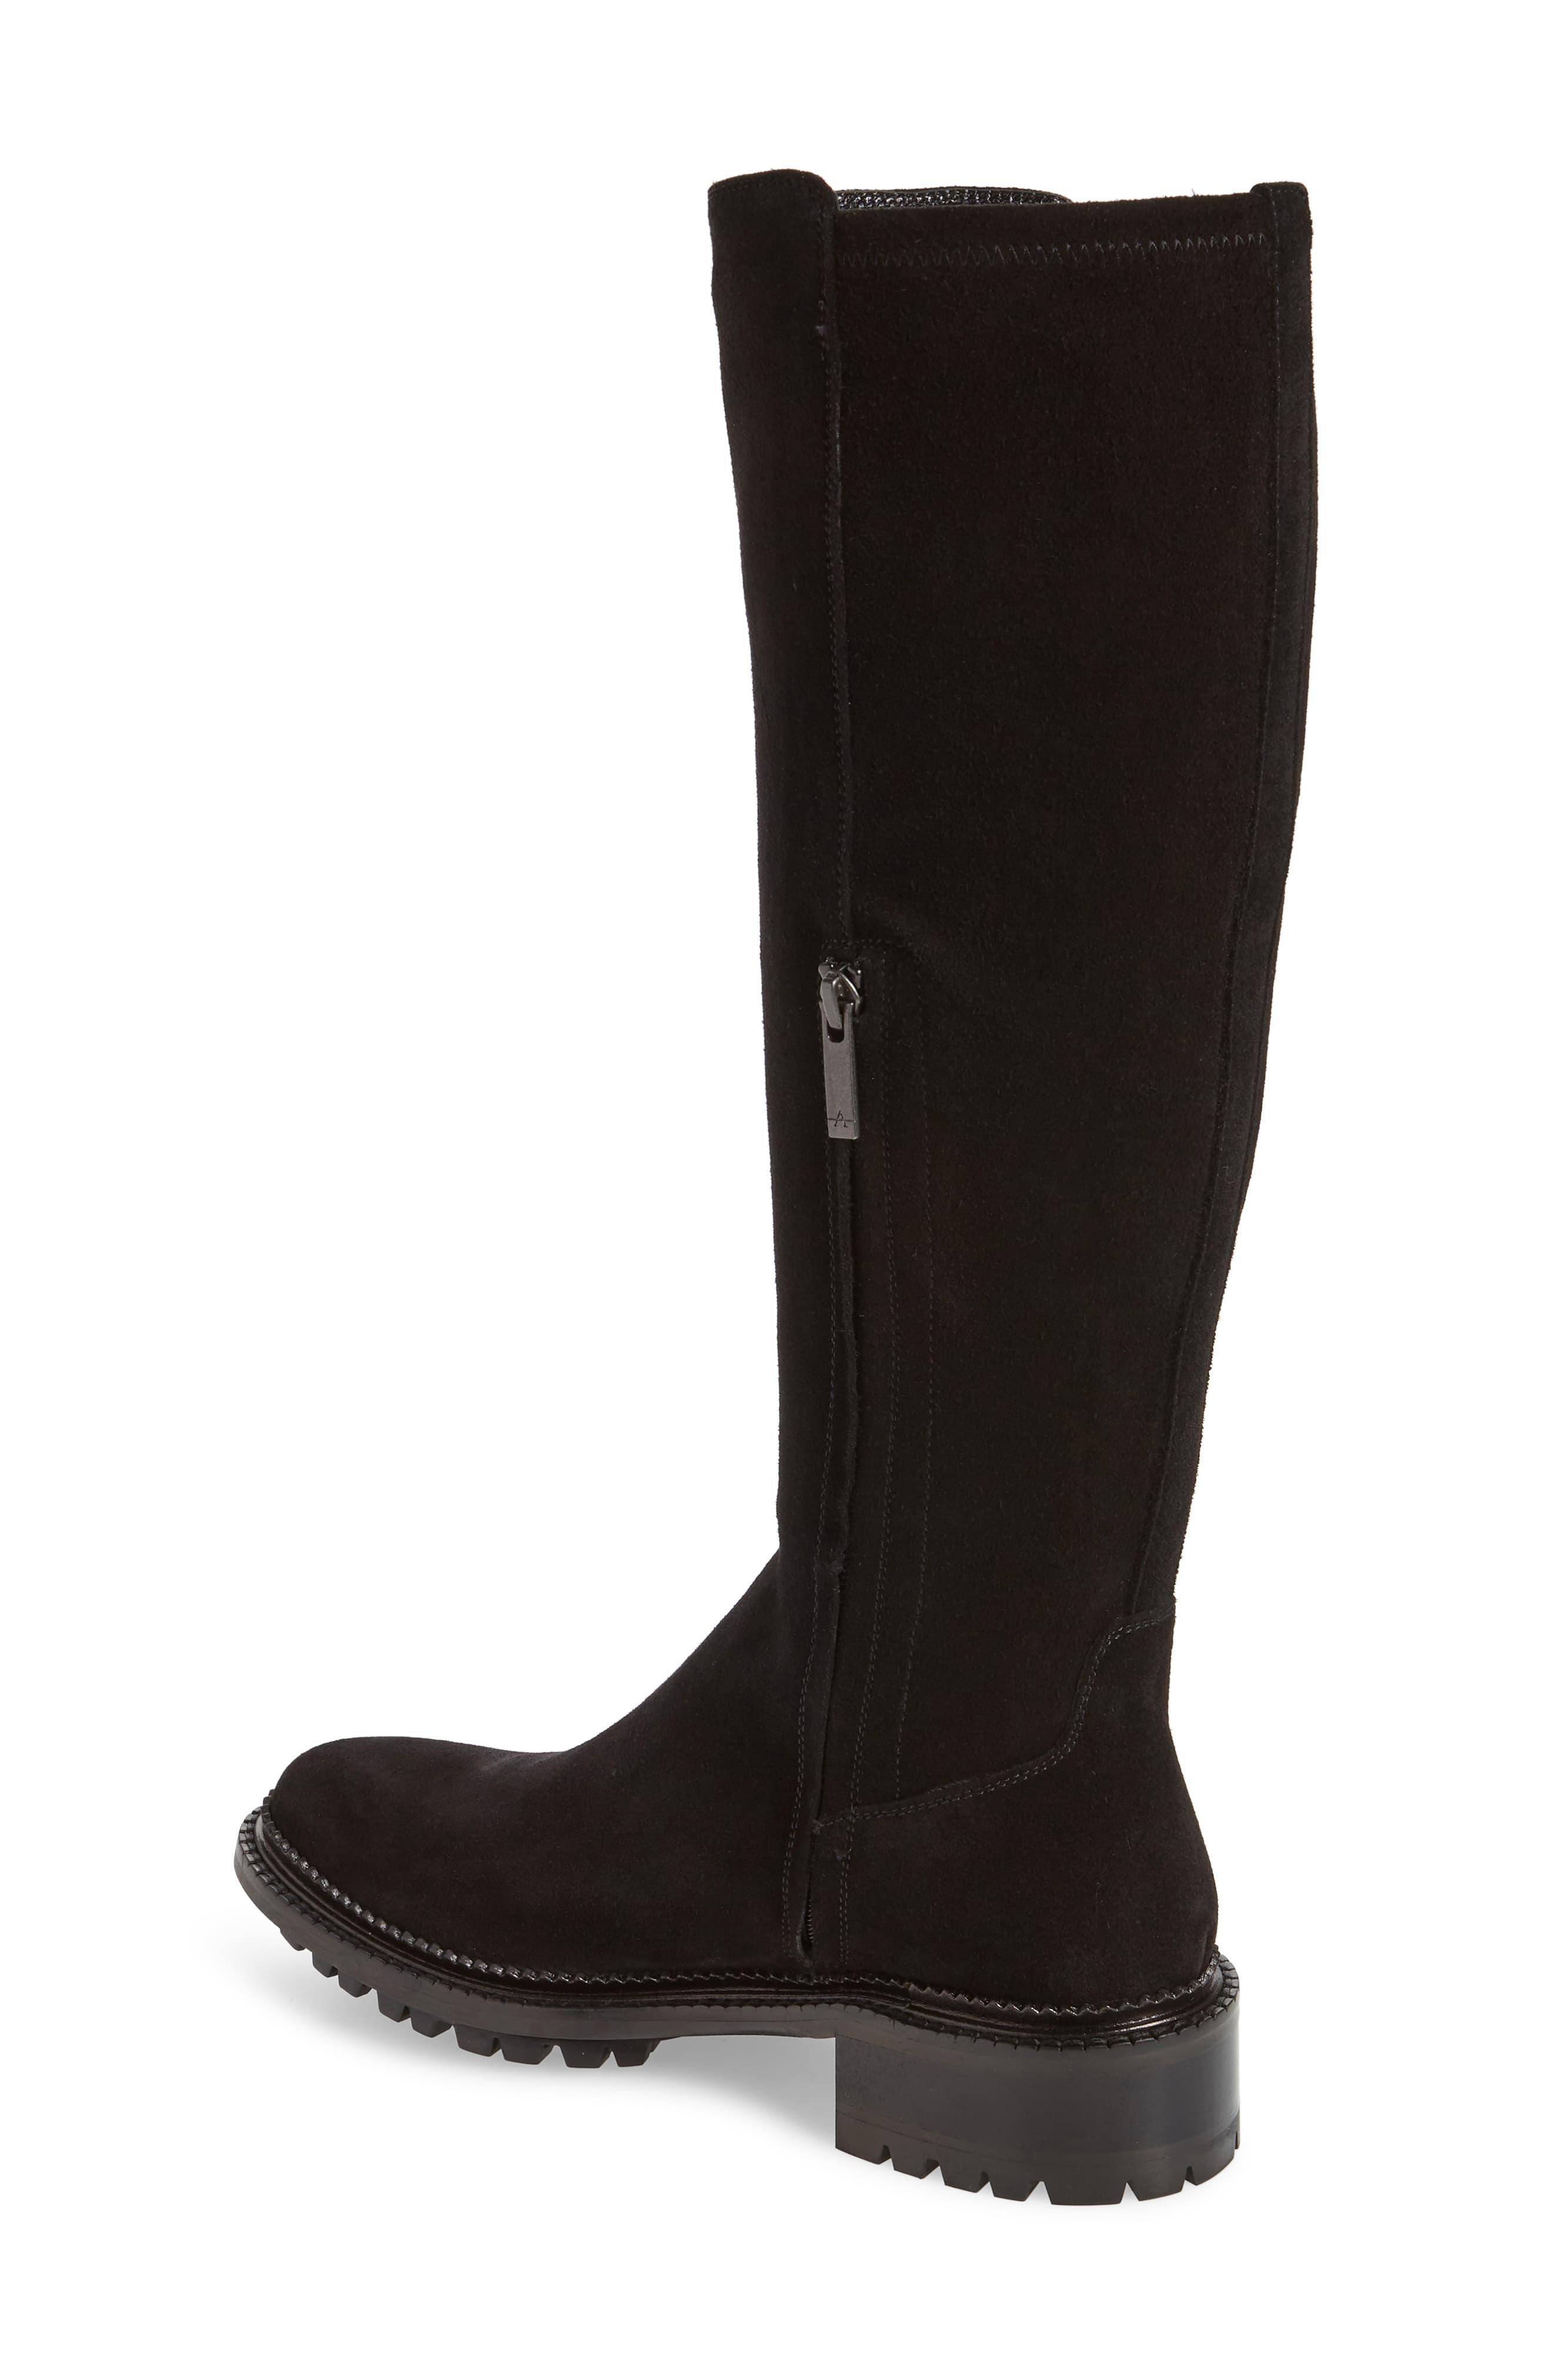 Aquatalia Oliviana Water Resistant Knee High Boot in Black - Lyst